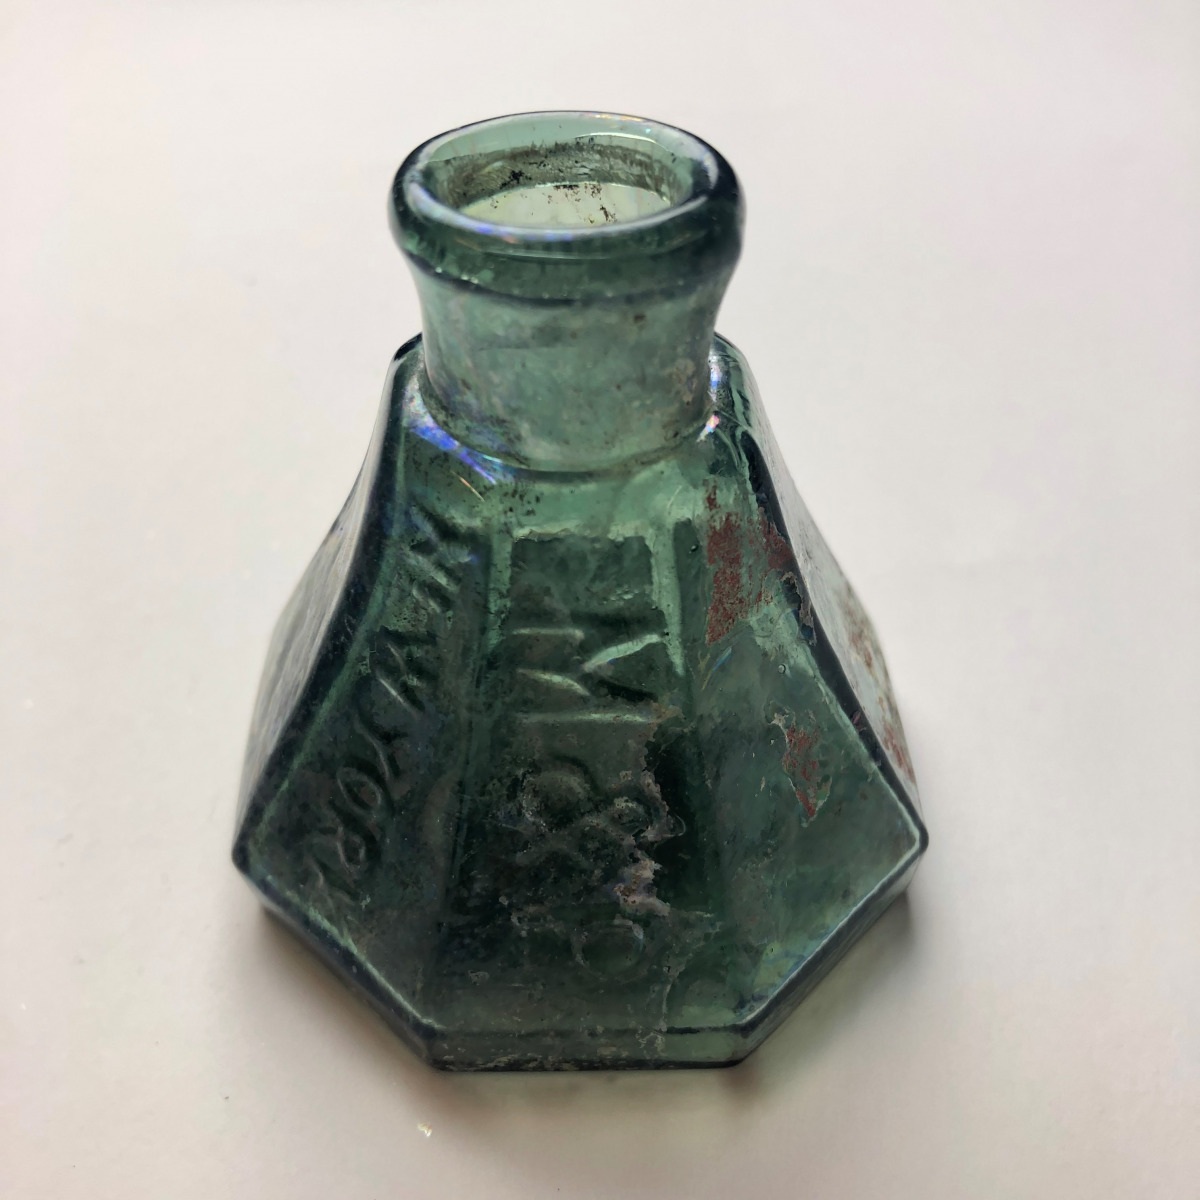 Umbrella-style ink bottle, ca. 1860s-1880s